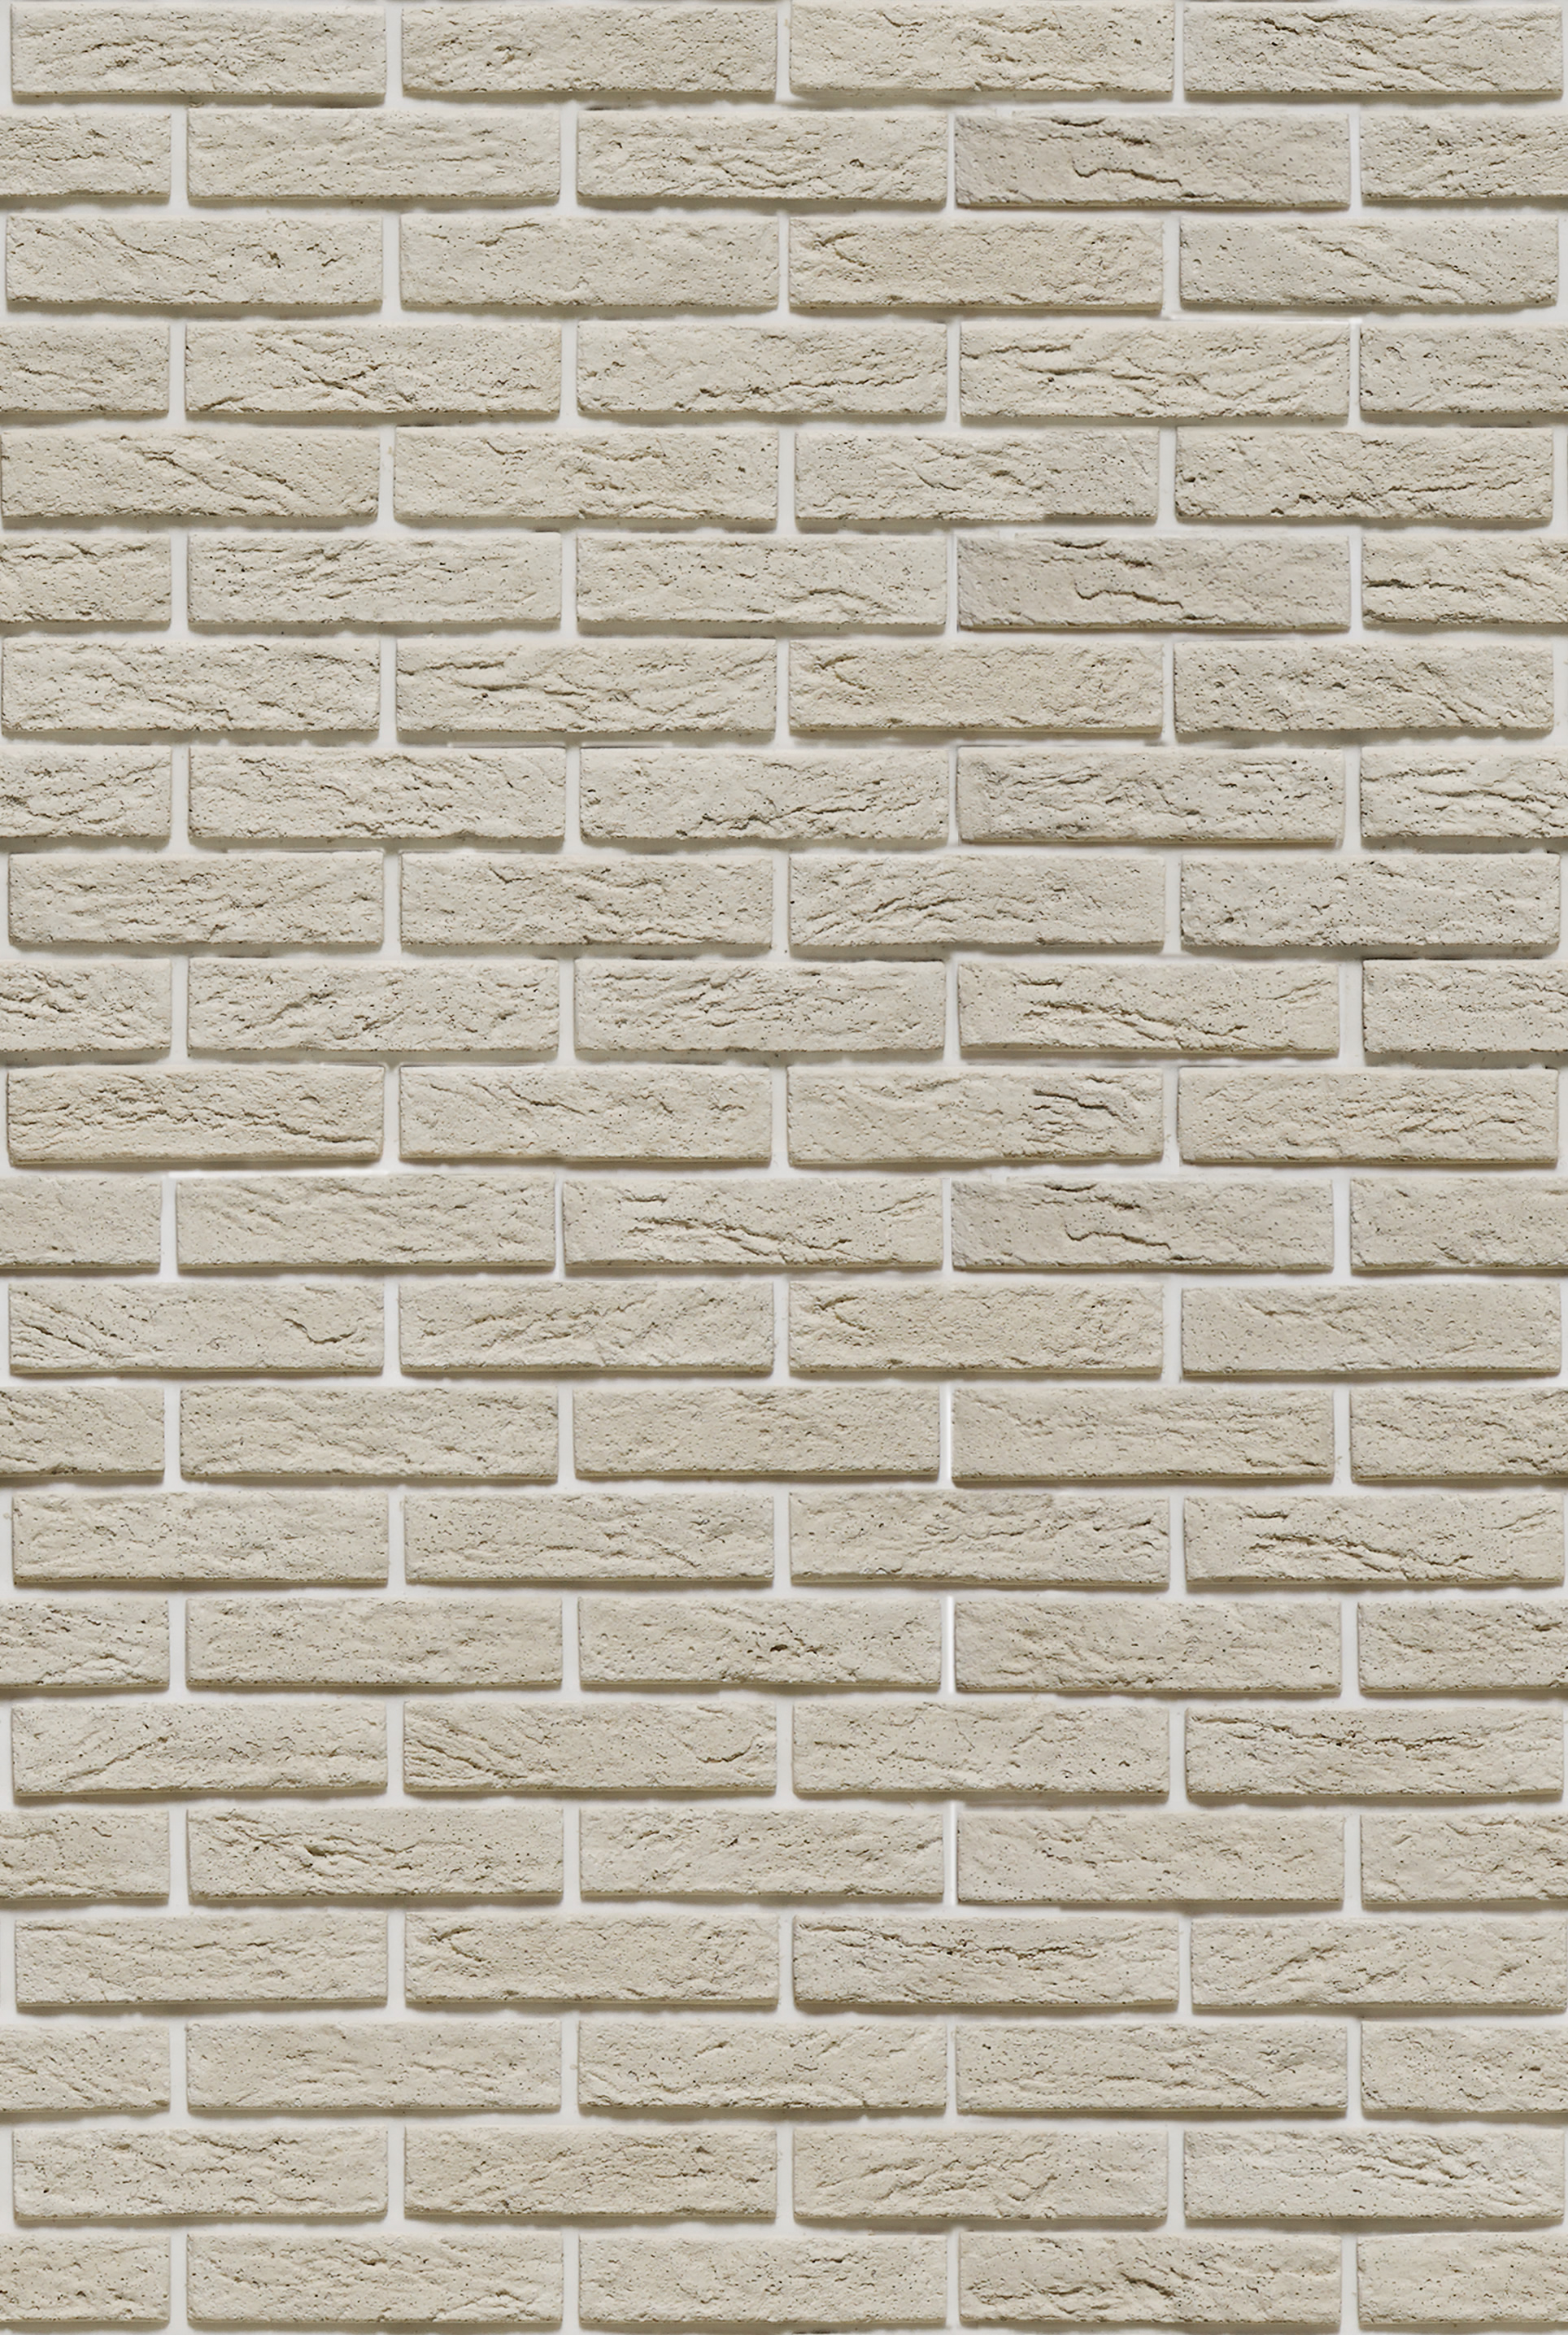  bricks, download photo, background, texture, wall